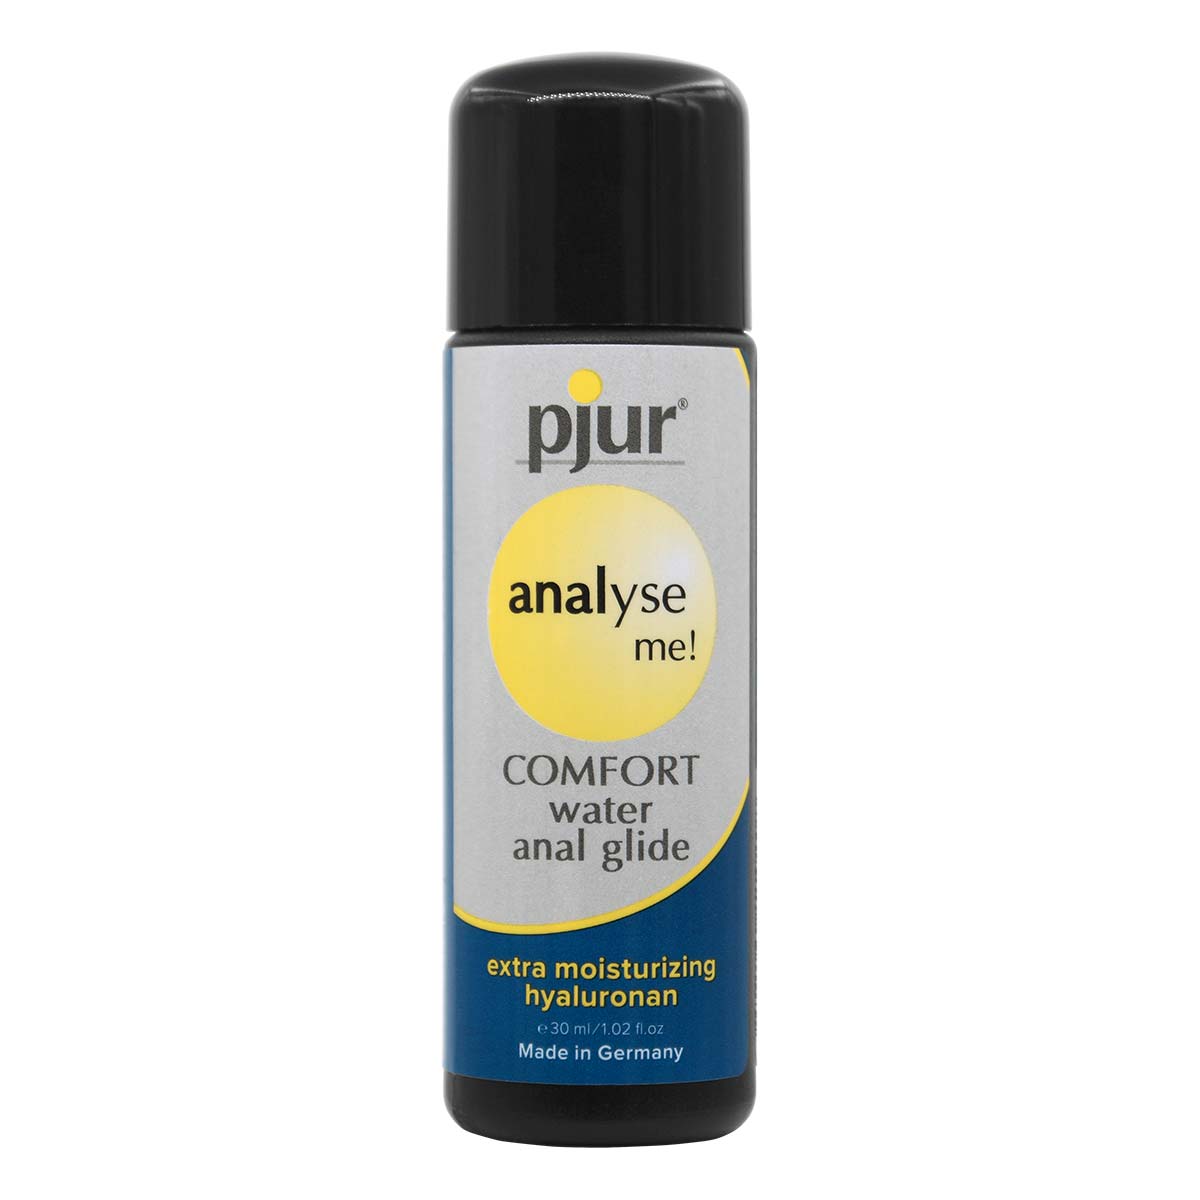 pjur analyse me! COMFORT 舒適肛交 30ml 水性潤滑液-p_2